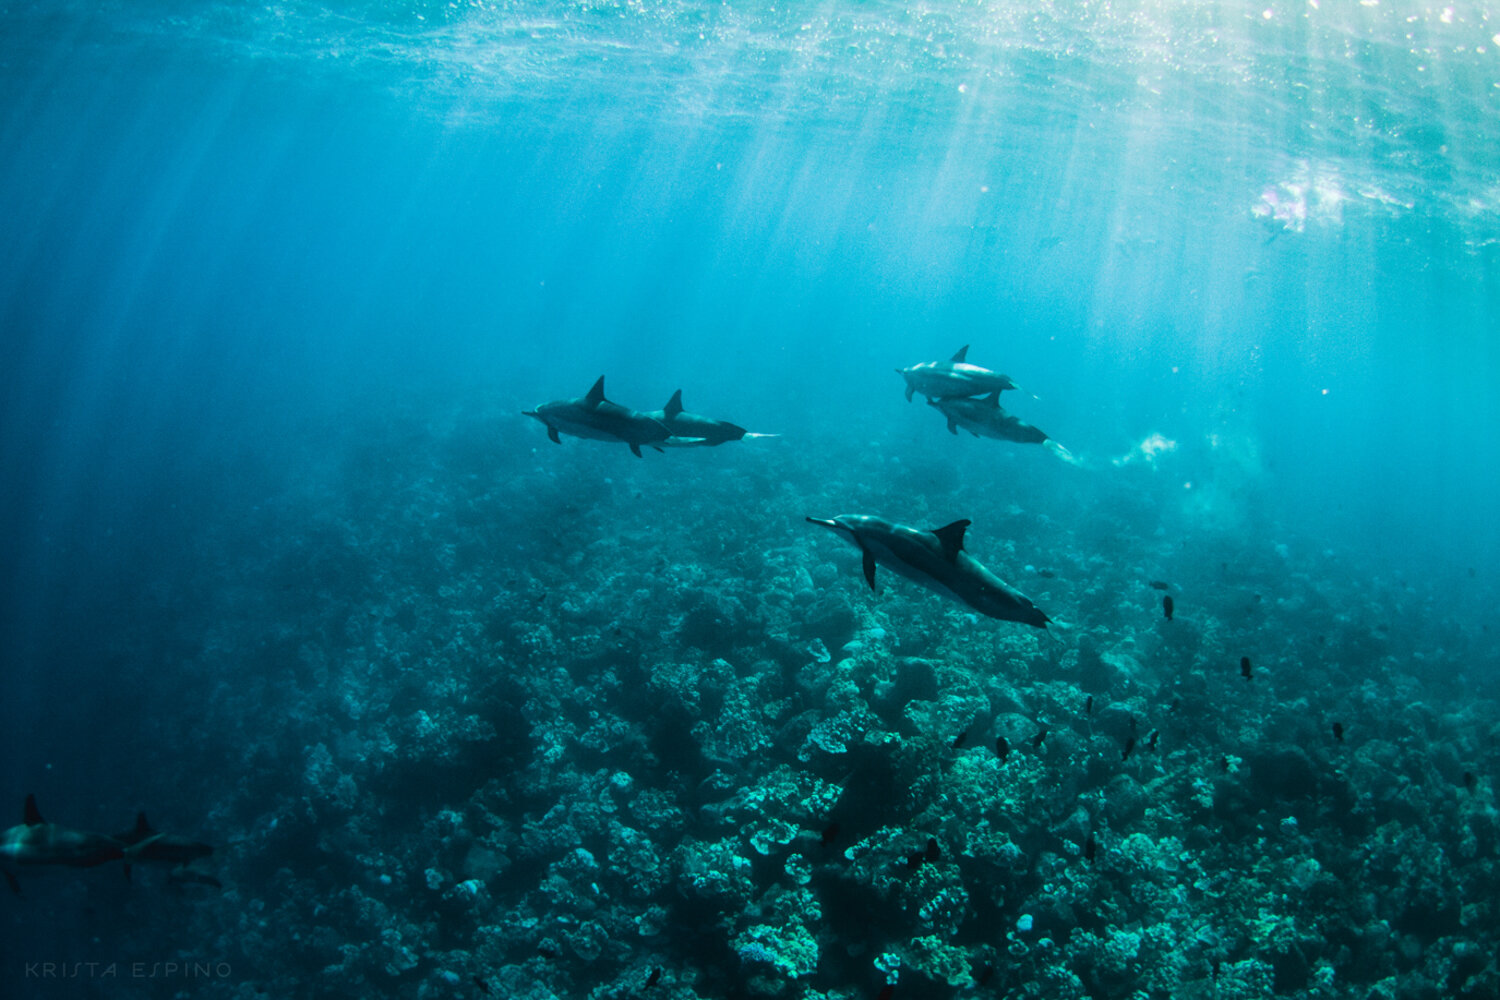 dolphin eco tour wild wildlife sealife lifestyle nature photography photographer krista espino travel underwater swim ocean big island hawaii kona dolphins_-18.jpg